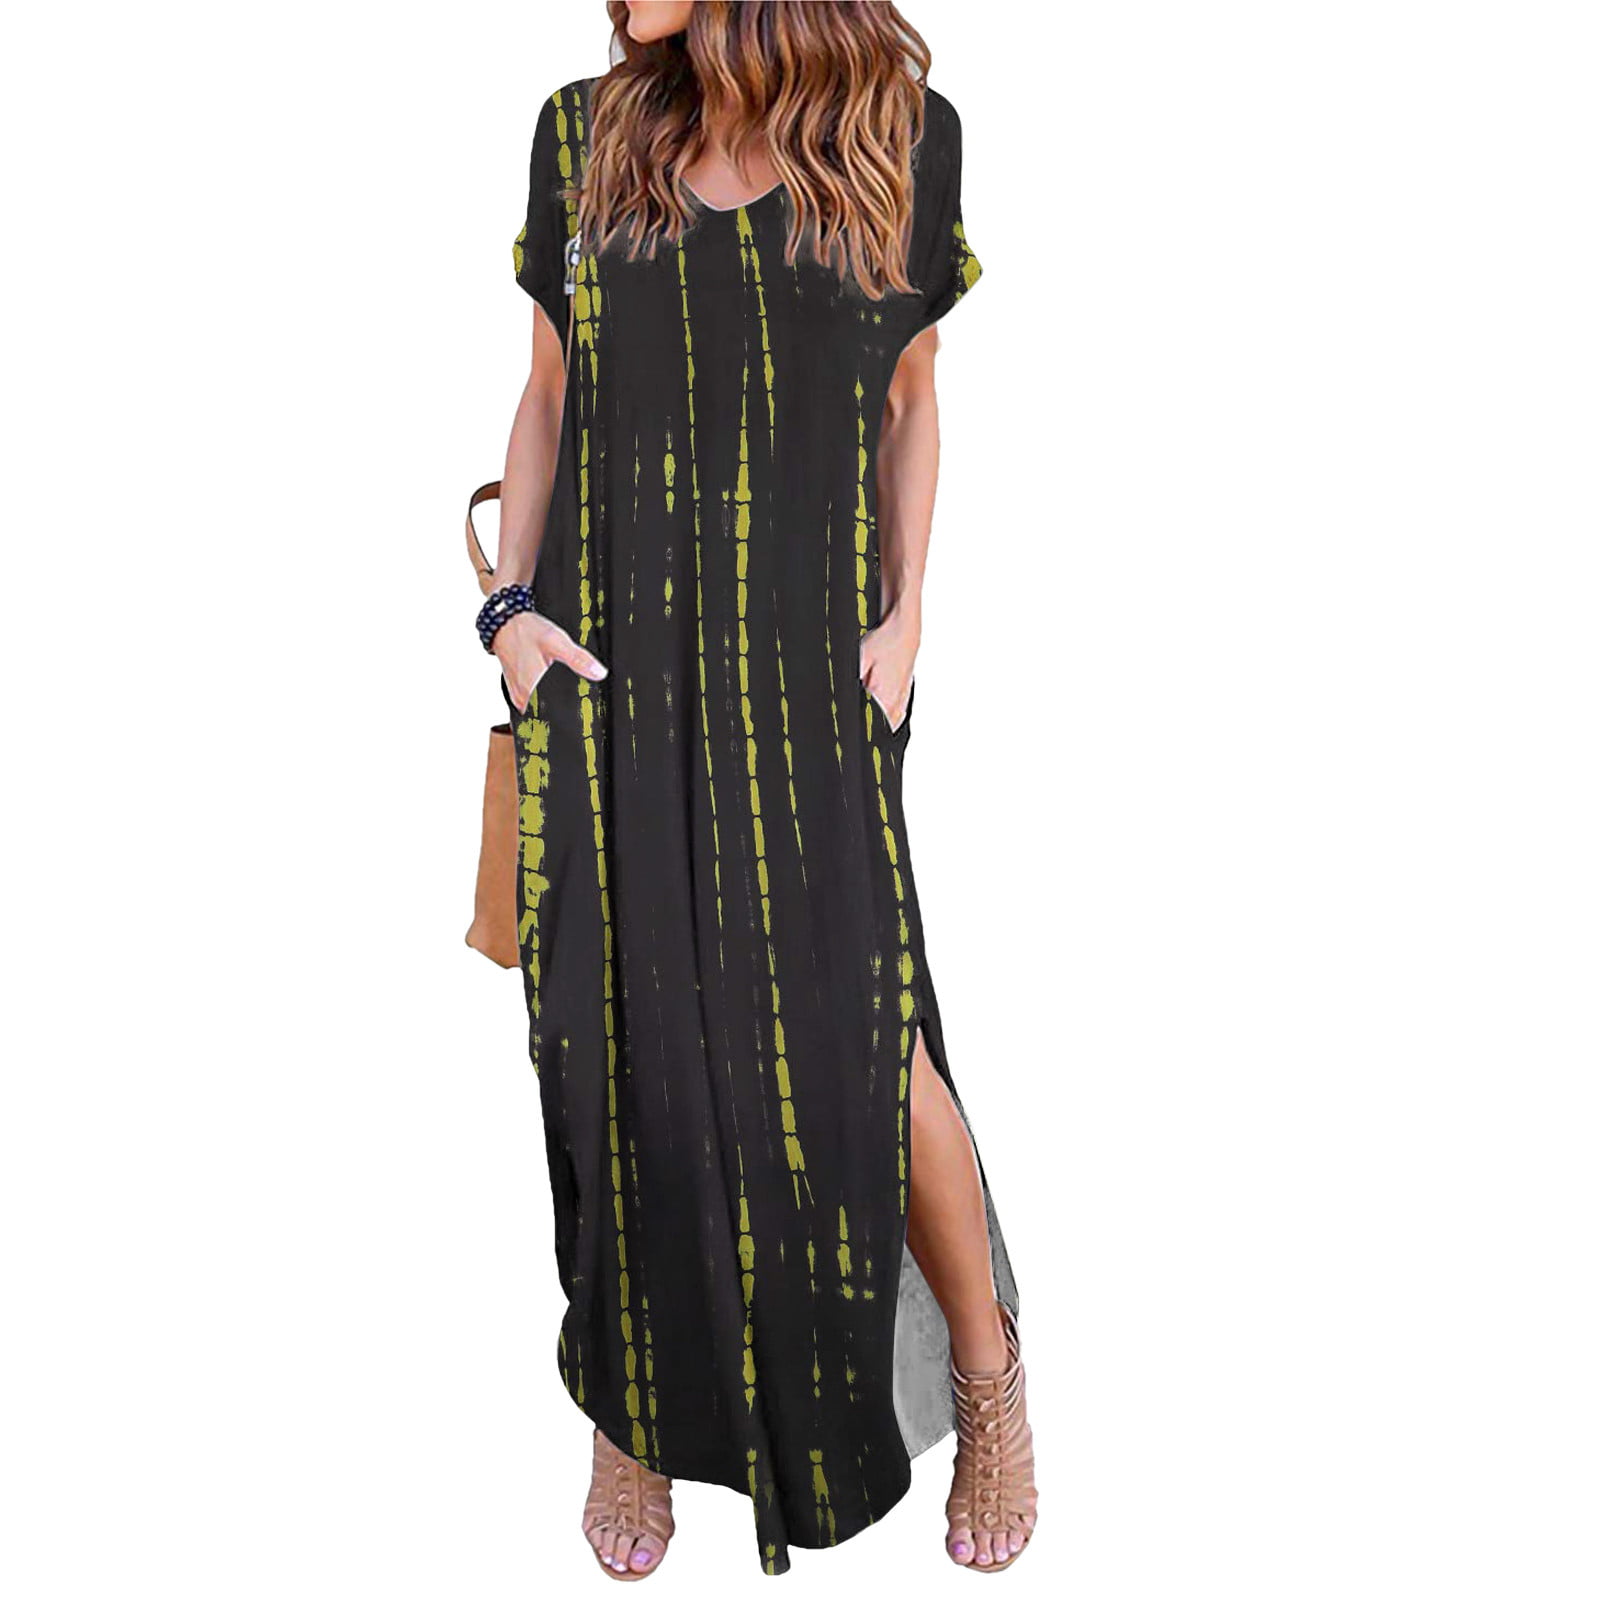 Shakumy Womens Casual Summer Plus Size V Neck Long Maxi Dress with Pocket Spaghetti Strap Casual Holiday Beach Sun Dresses 